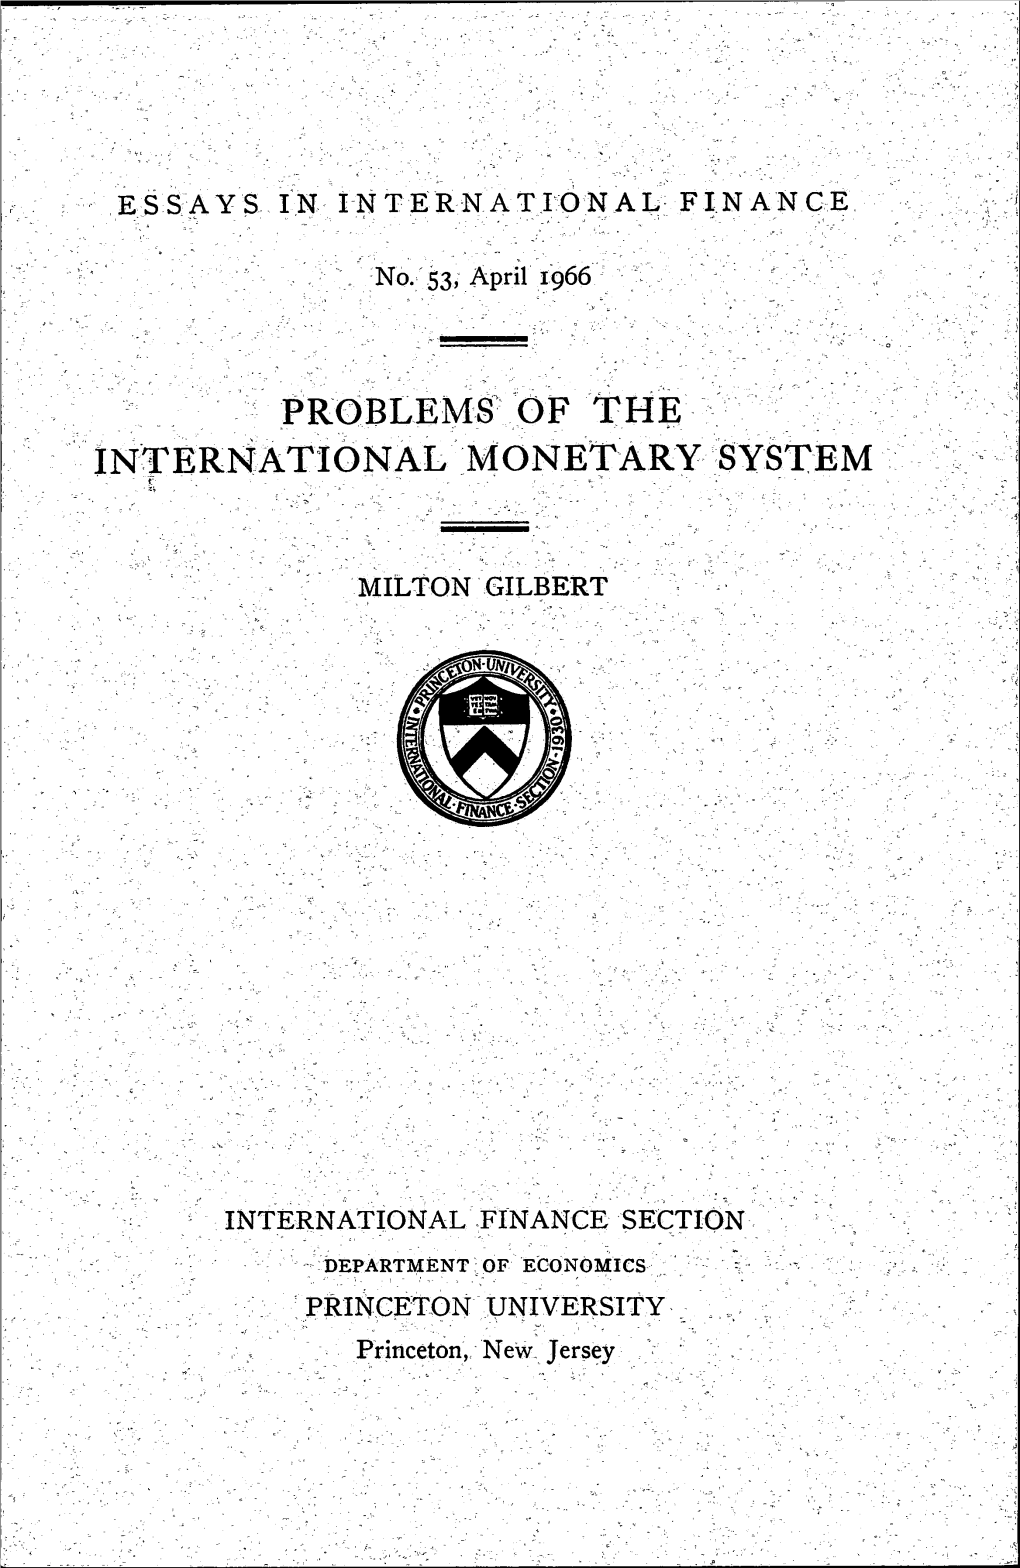 ESSAYS in INTERNATIONAL FINANCE No.'53, April 1966 INTERNATIONAL FINANCE SECTION PRINCETON UNIVERSITY Princeton, New Jersey